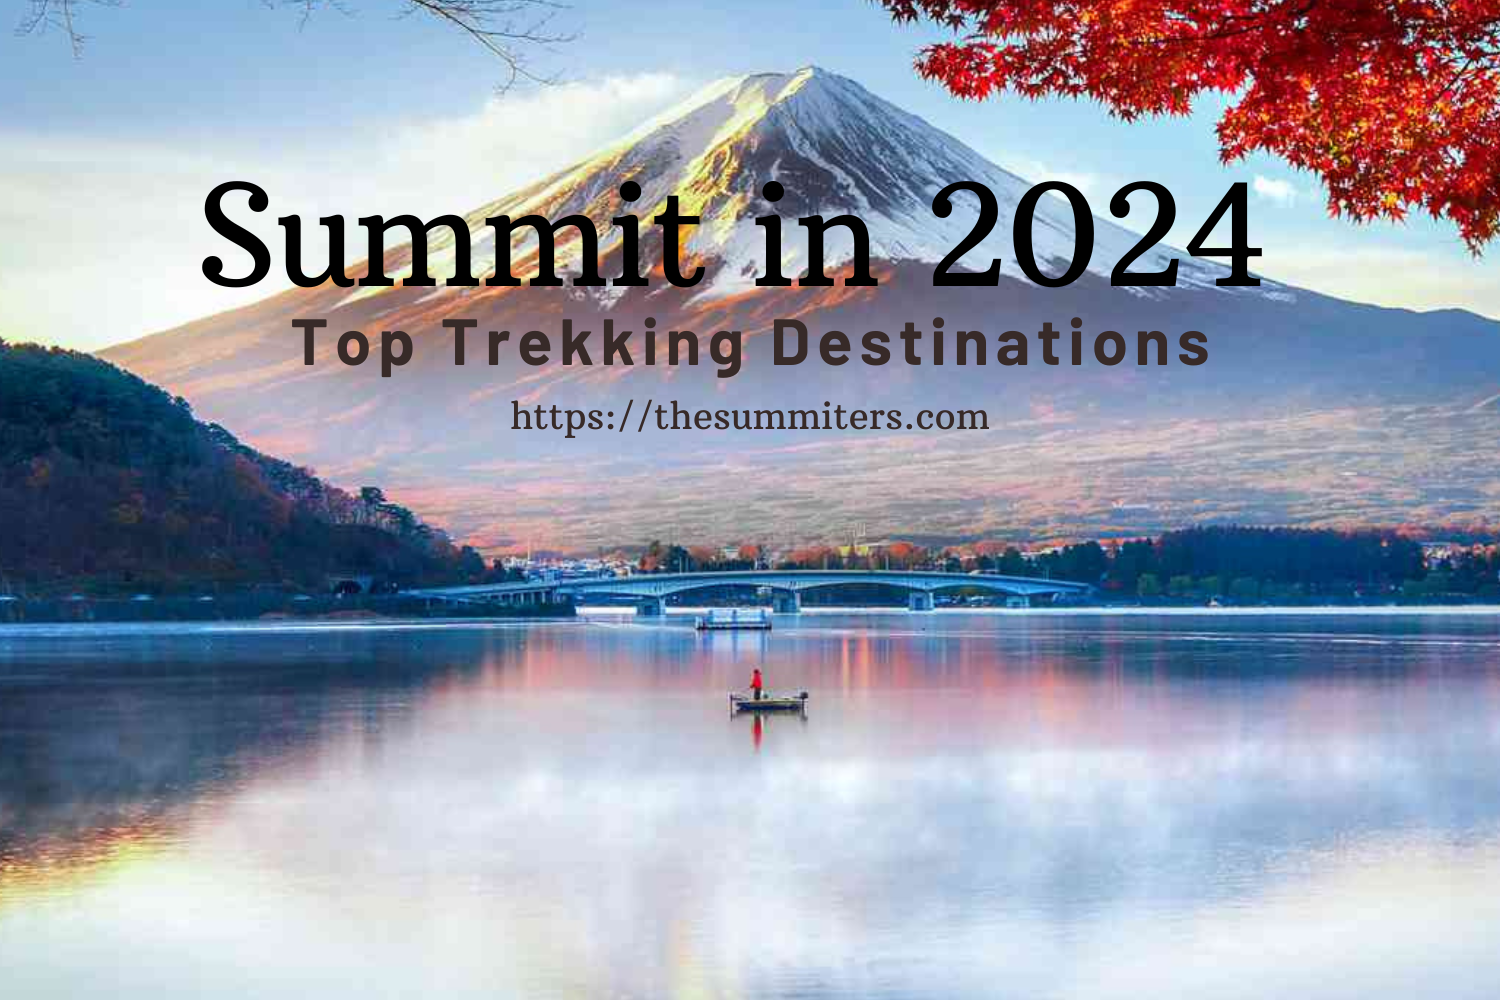 Summit in 2024 Incredible Trekking Destinations The Summiters